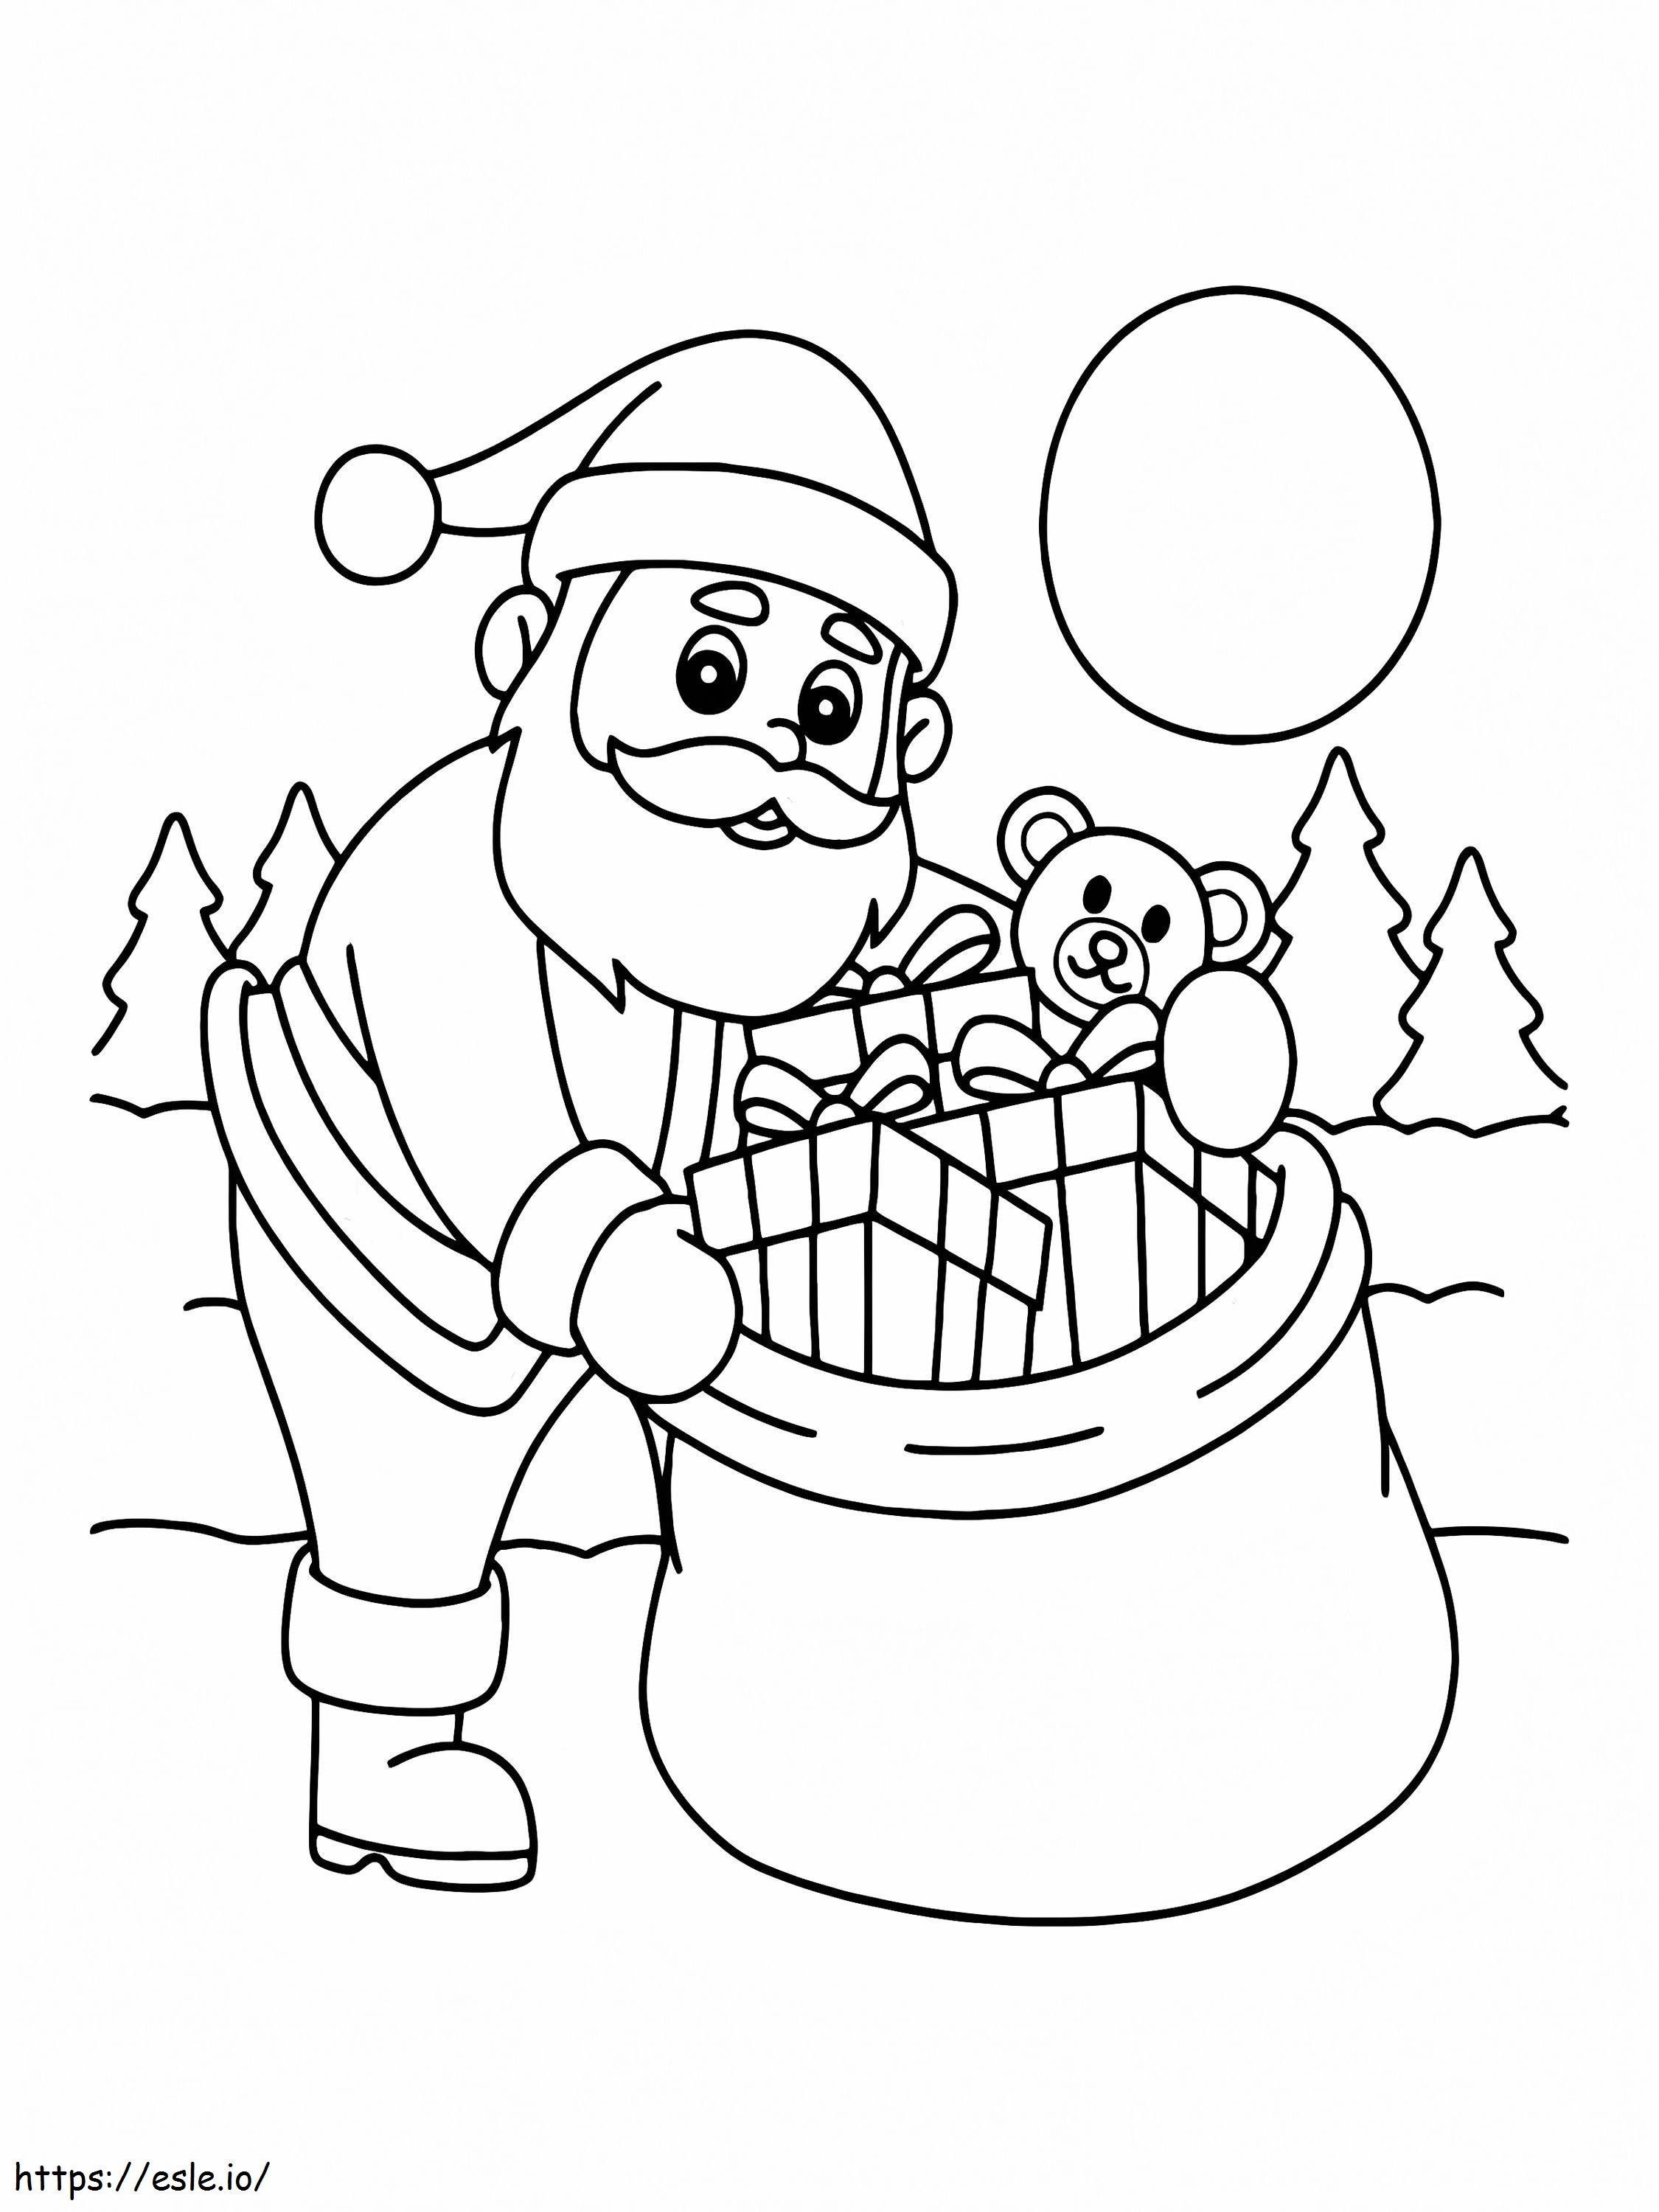 Santa Claus Preparing Gift coloring page